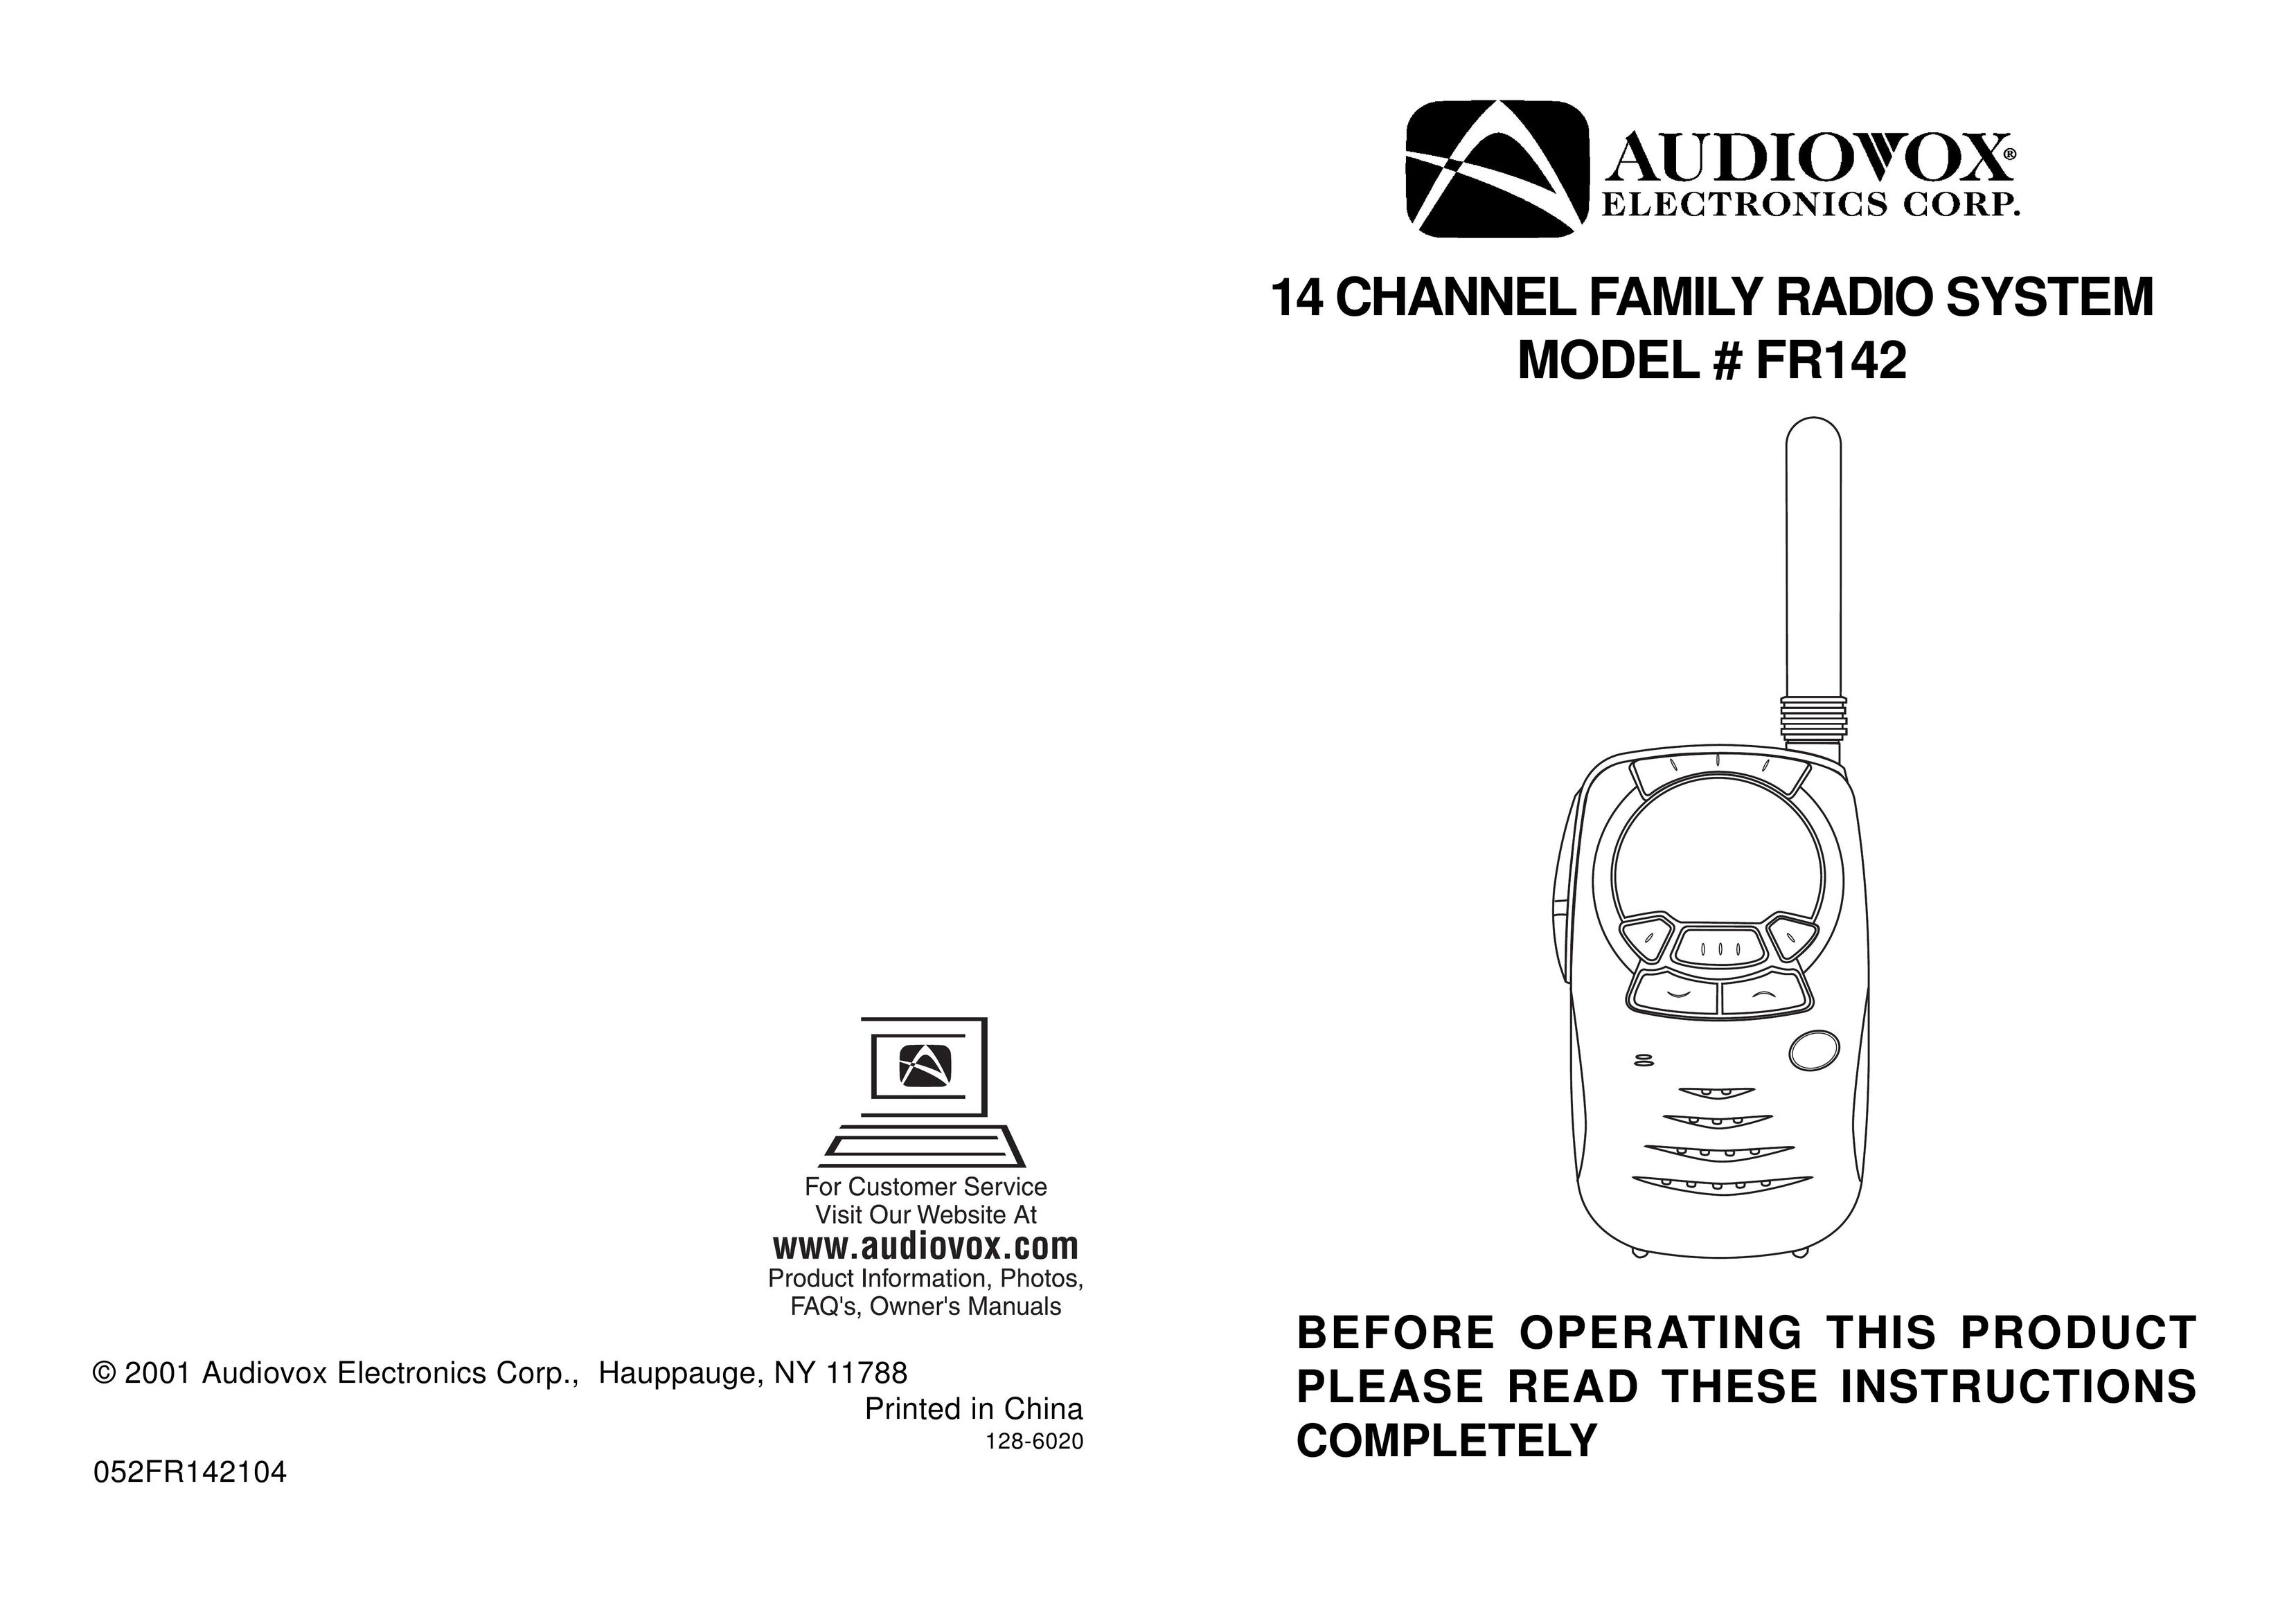 Audiovox FR142 Two-Way Radio User Manual